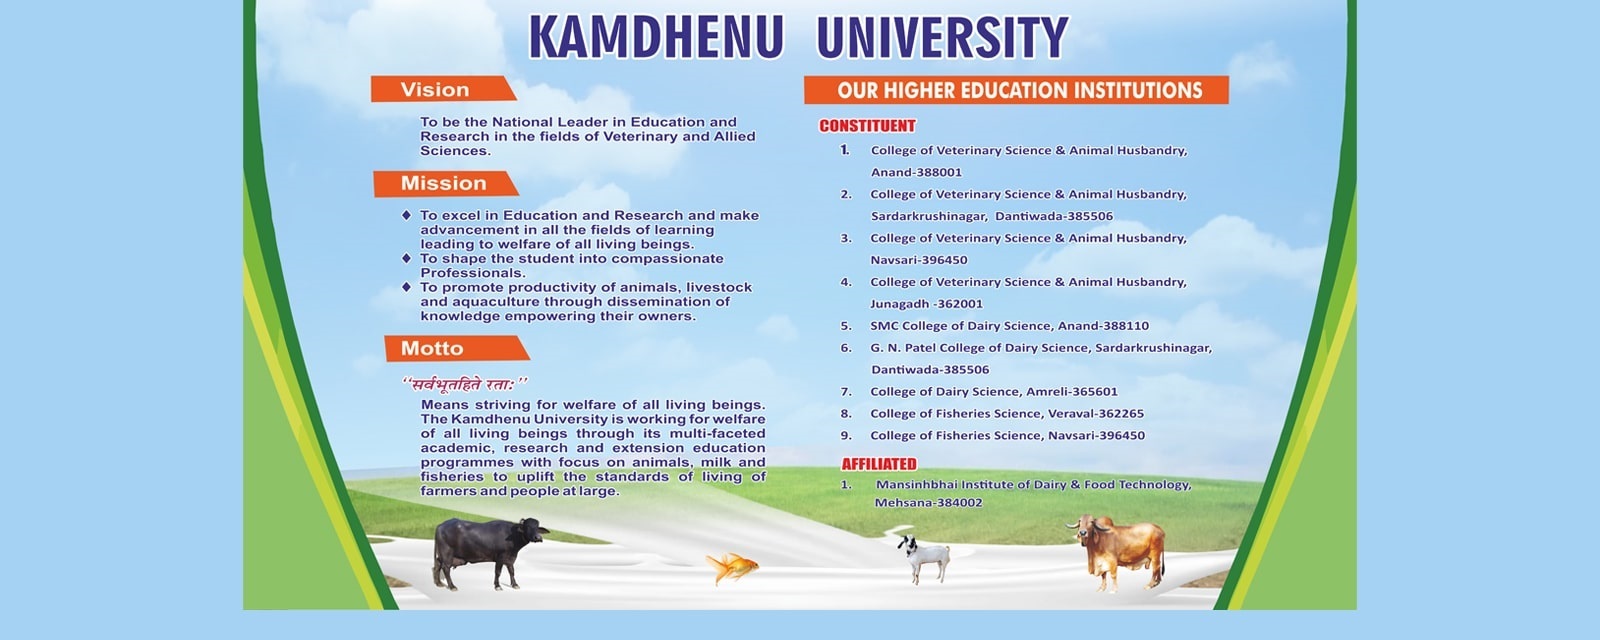 9th Annual Convocation of Kamdhenu University